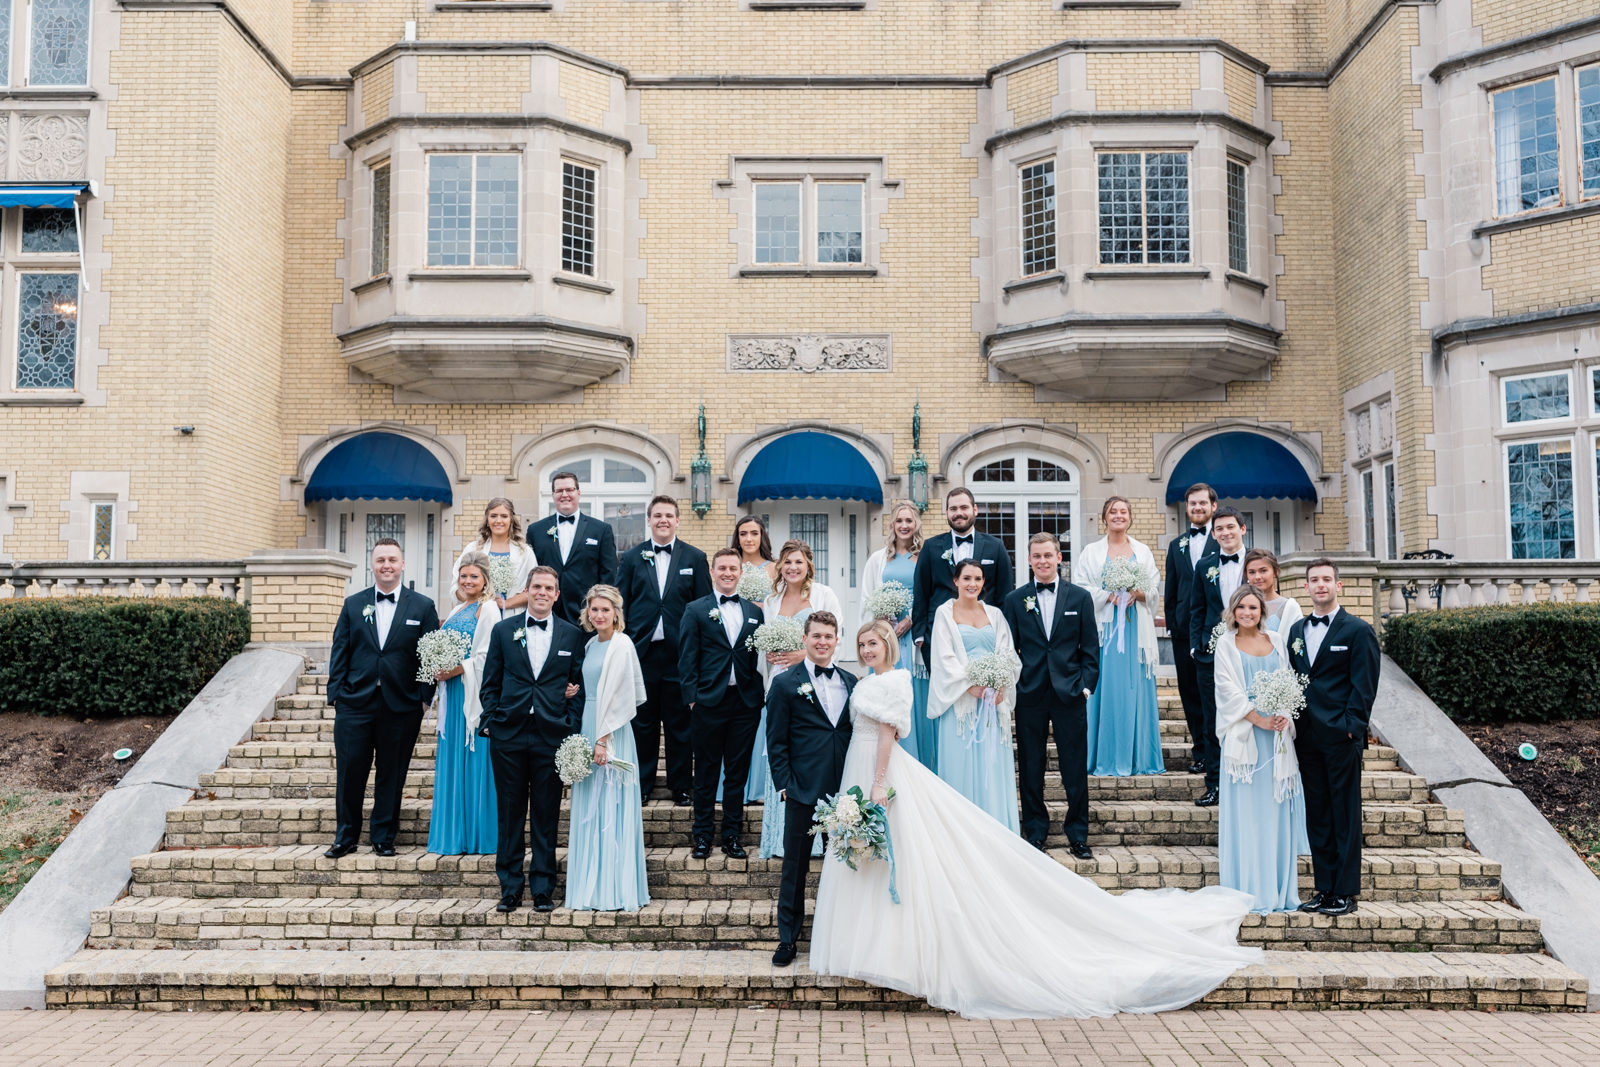 Laurel Hall Wedding Photographer | Estate Wedding Venue | Midwest Film Photographer | Large Bridal Party Steps